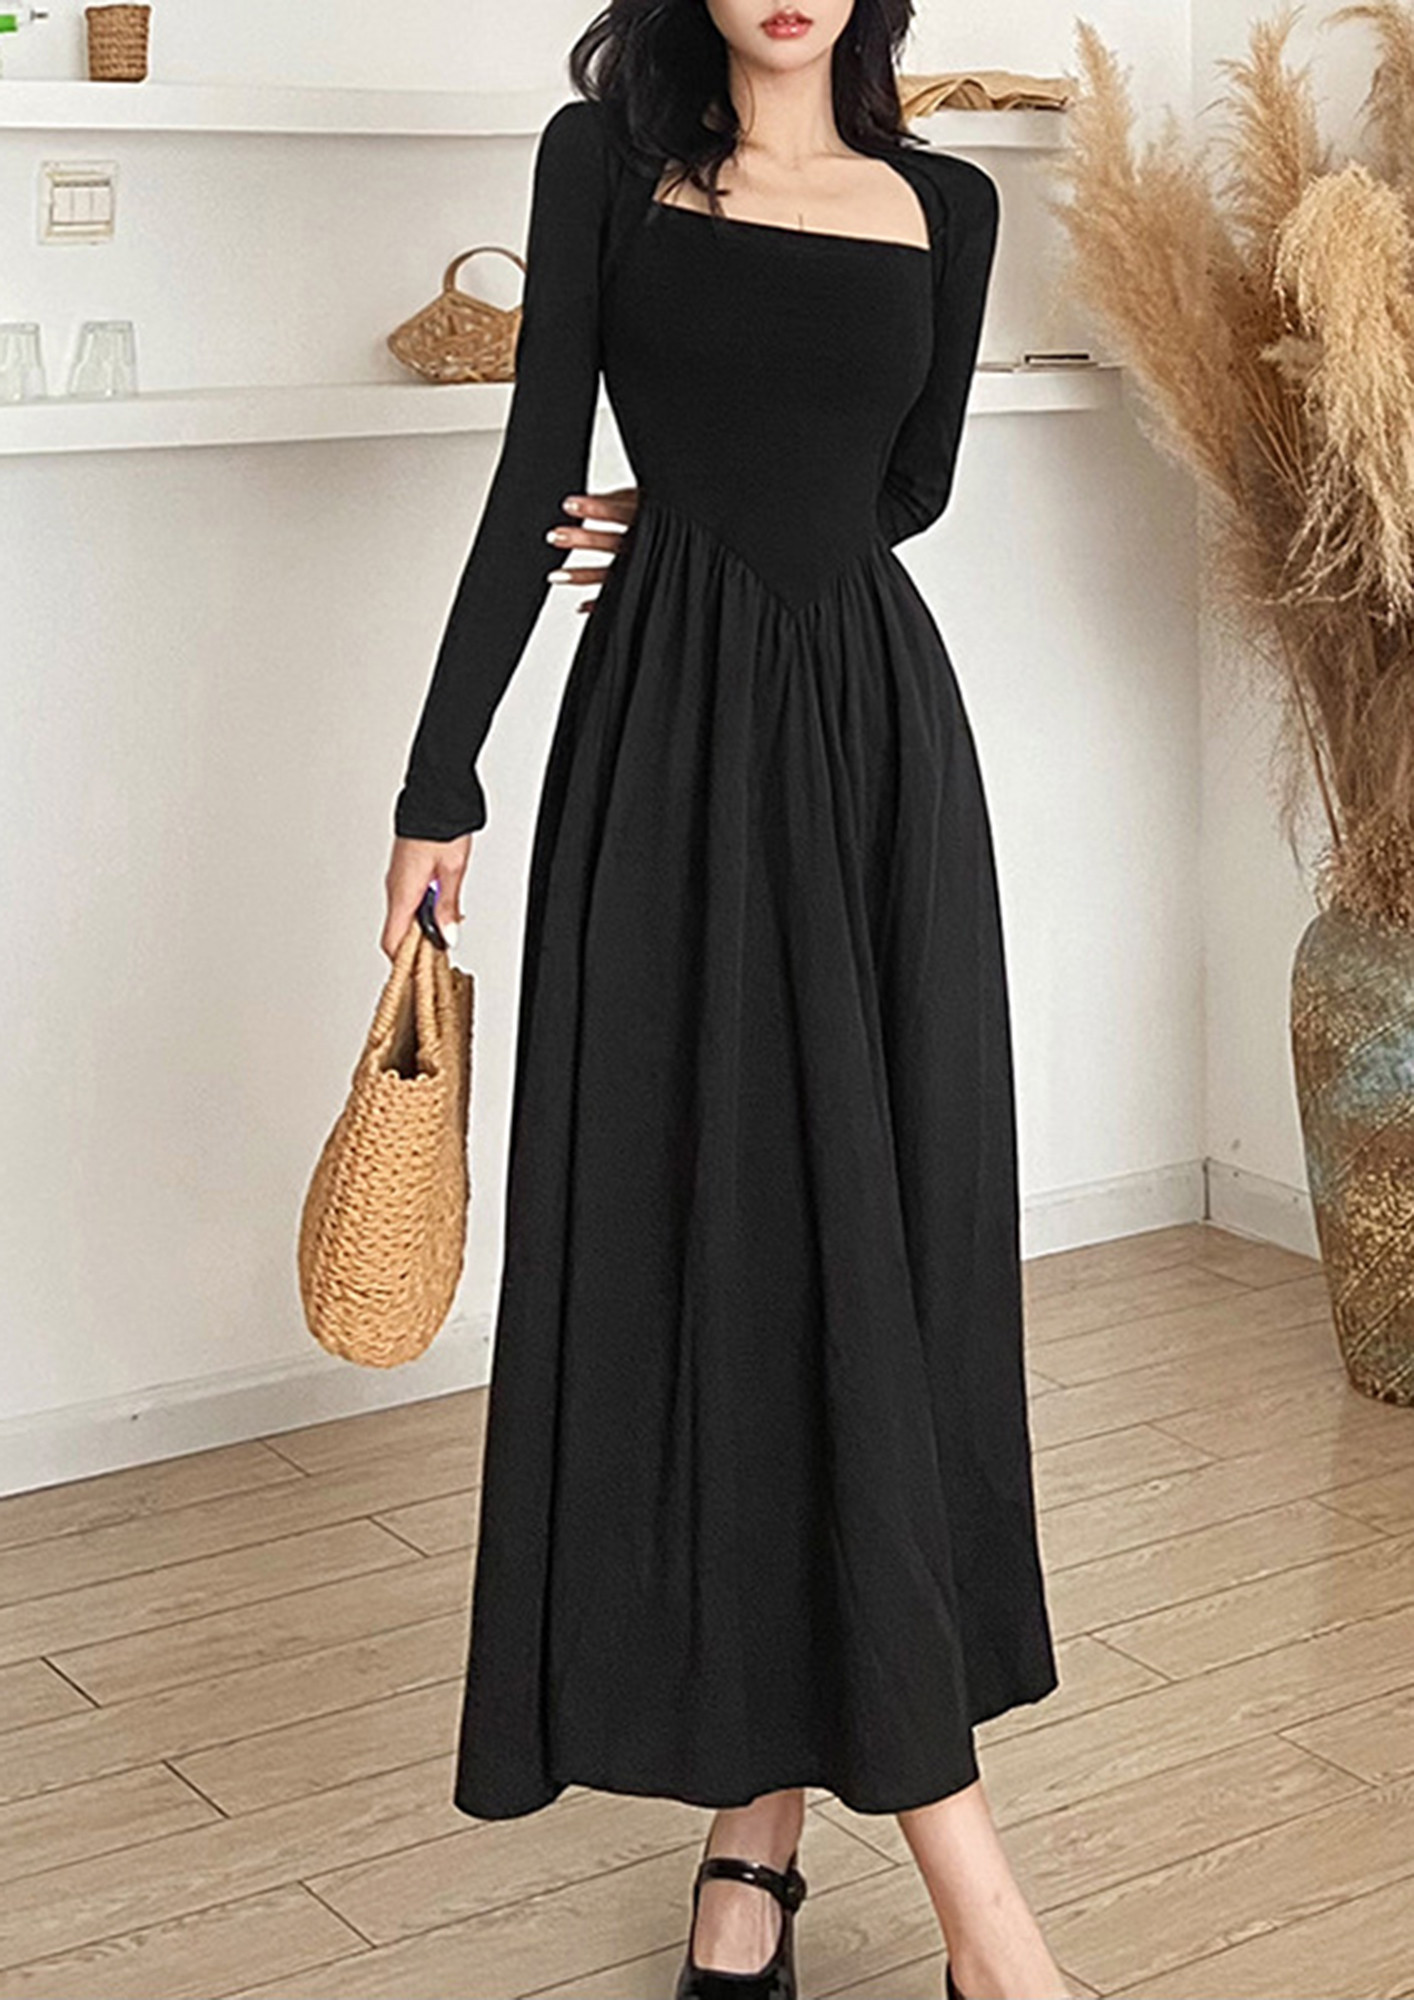 Glam Black Dress - Wrap Maxi Dress - Long Sleeve Dress - Lulus